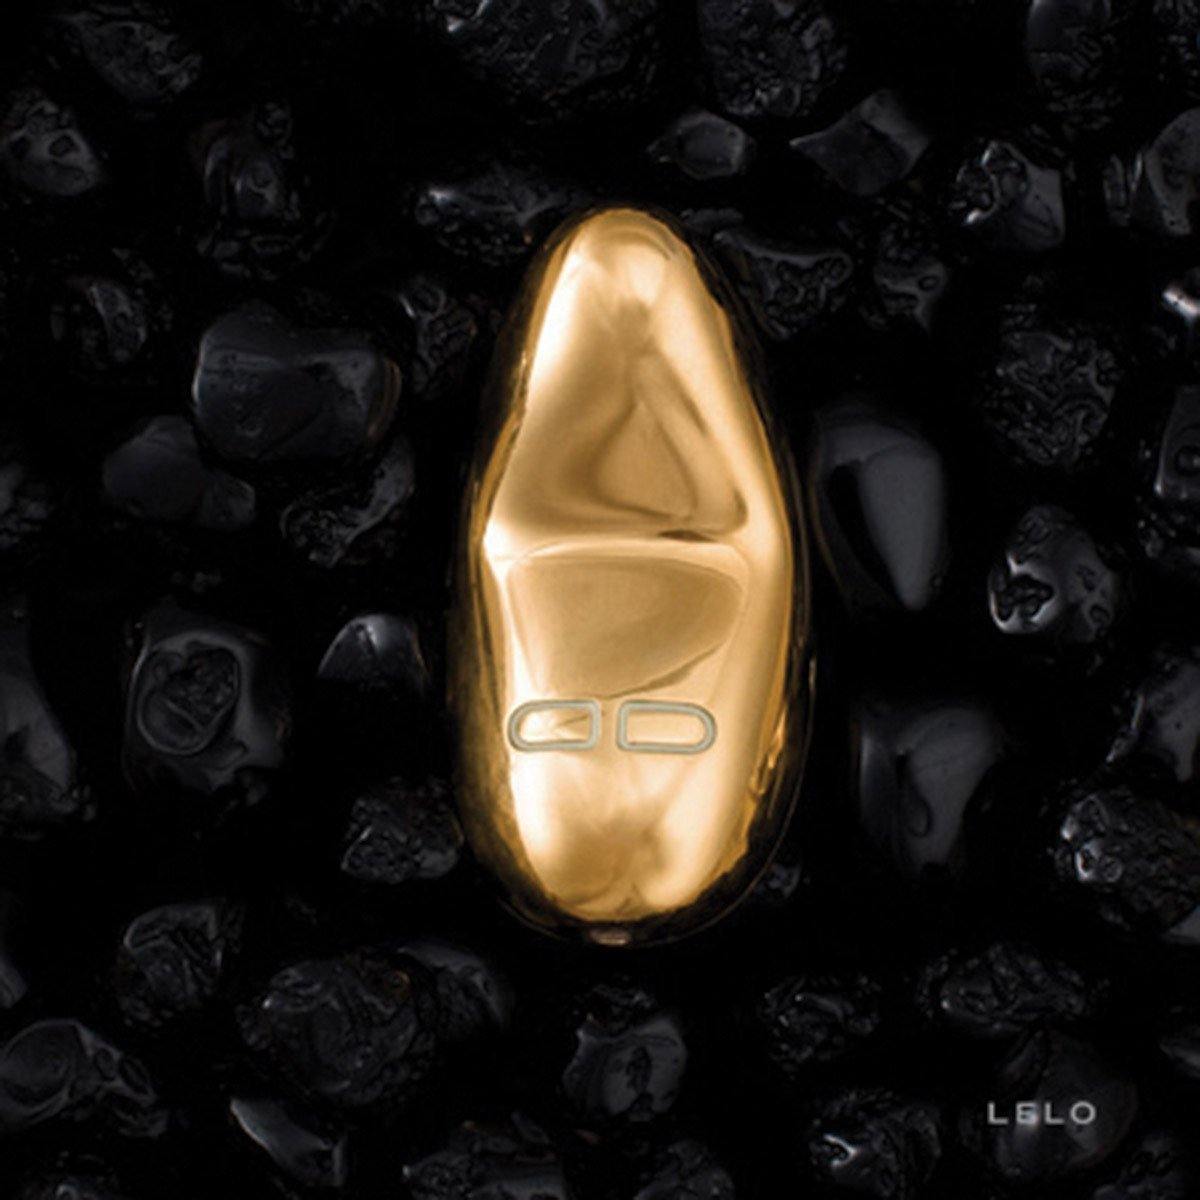 Lelo Yva 24K Gold - Buy At Luxury Toy X - Free 3-Day Shipping